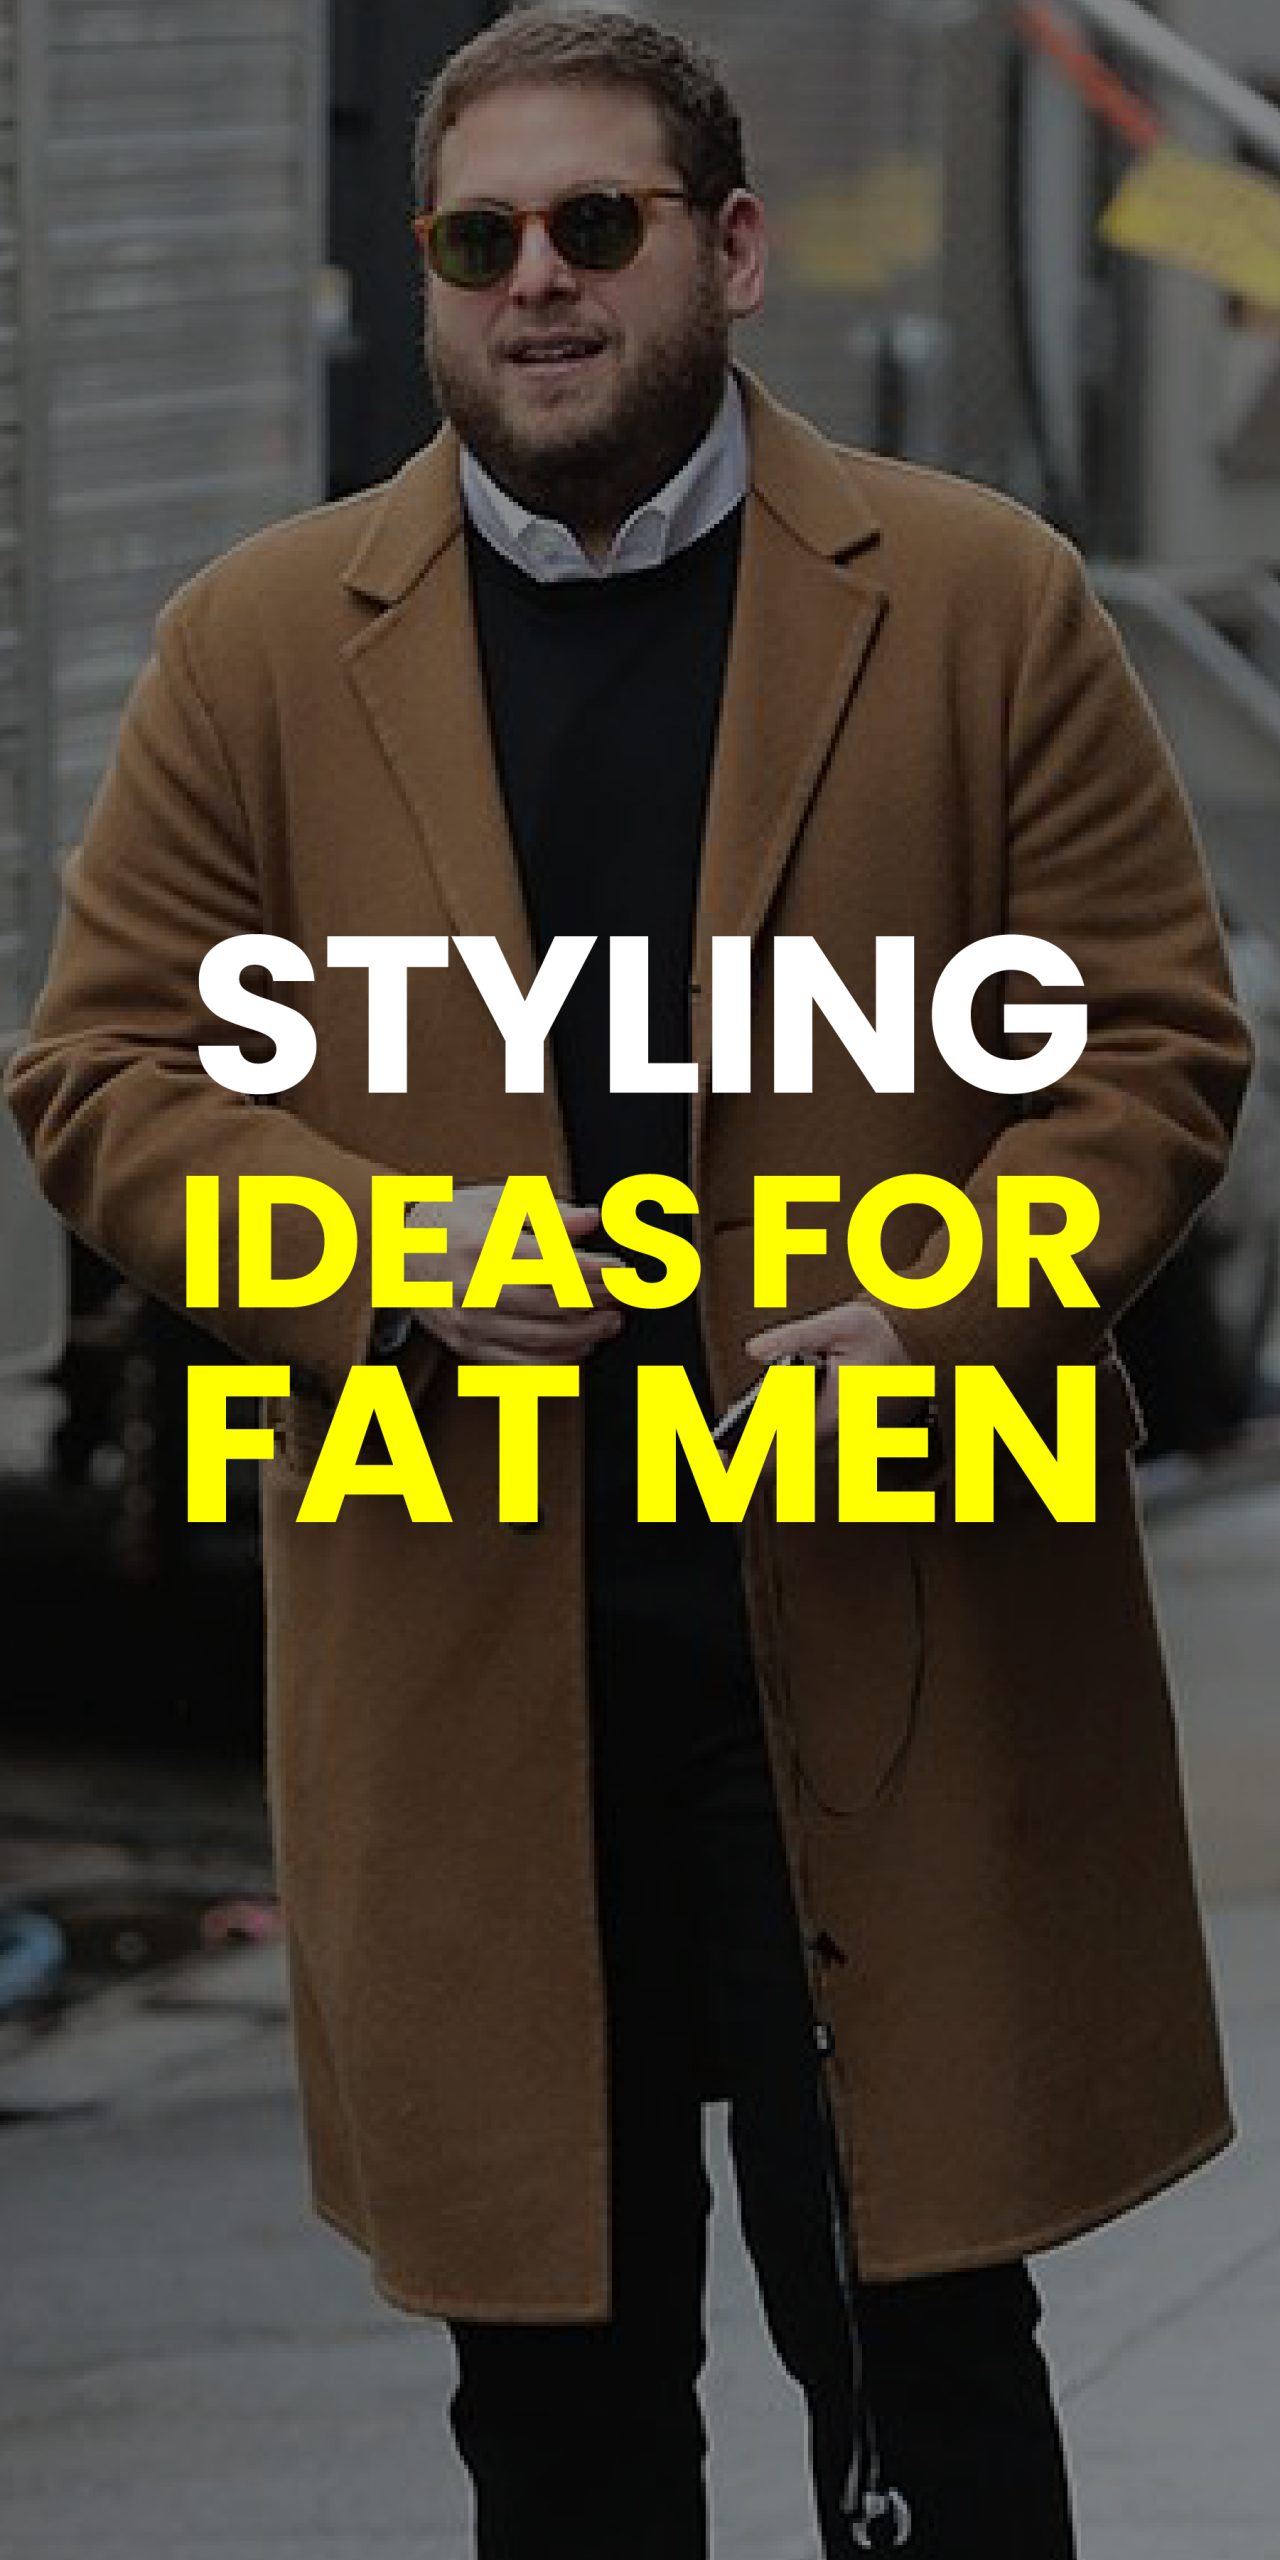 STYLING IDEAS FOR FAT MEN